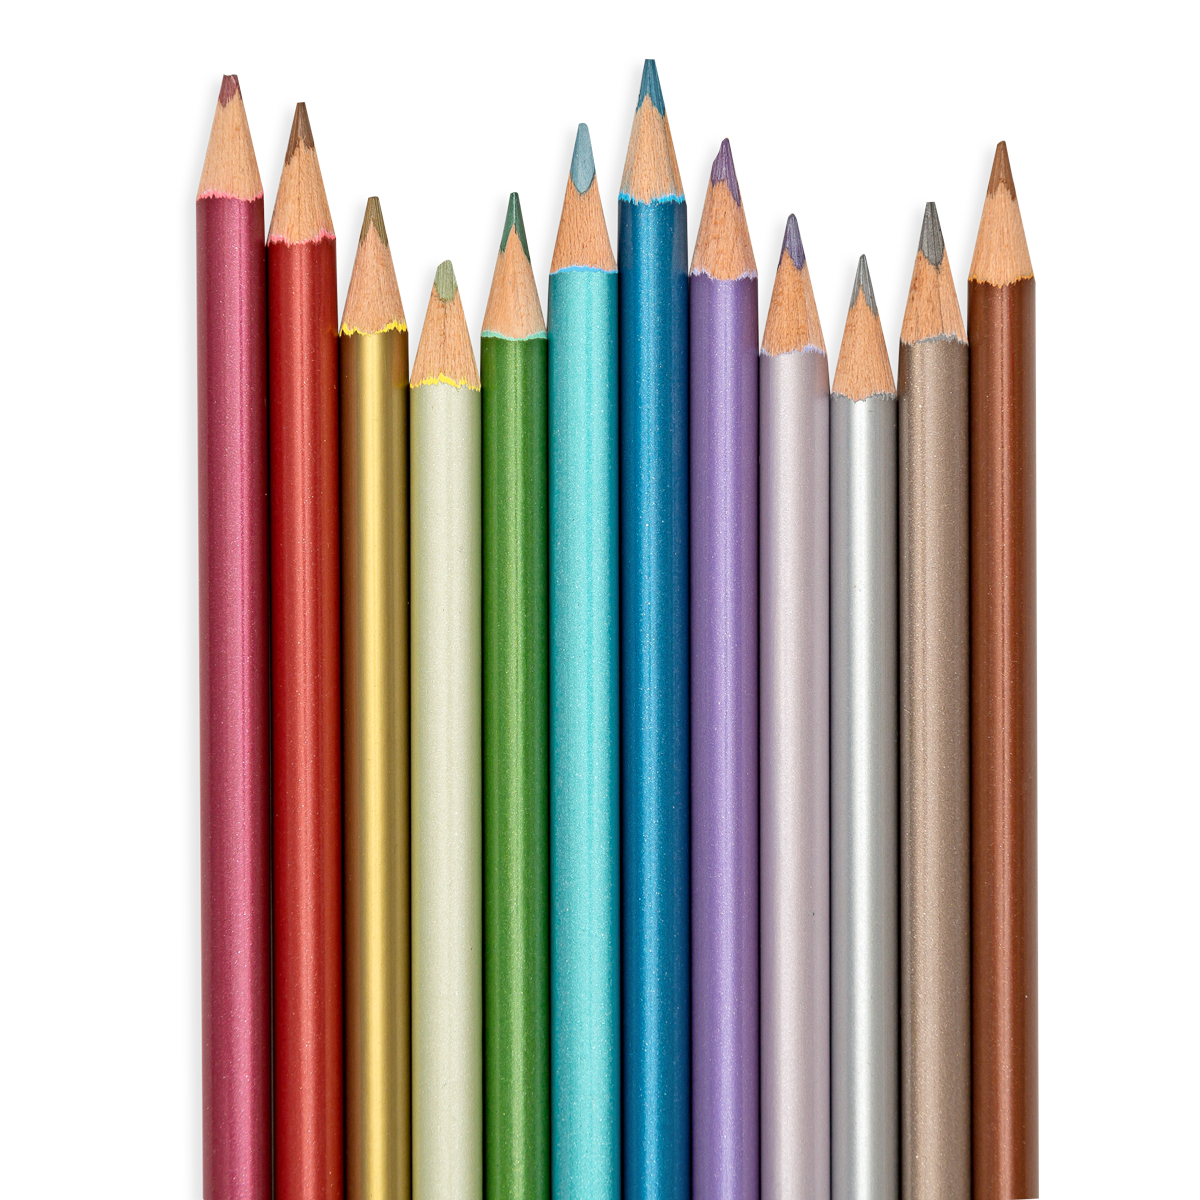 Razzle Dazzle Colored Pencils - Set of 12